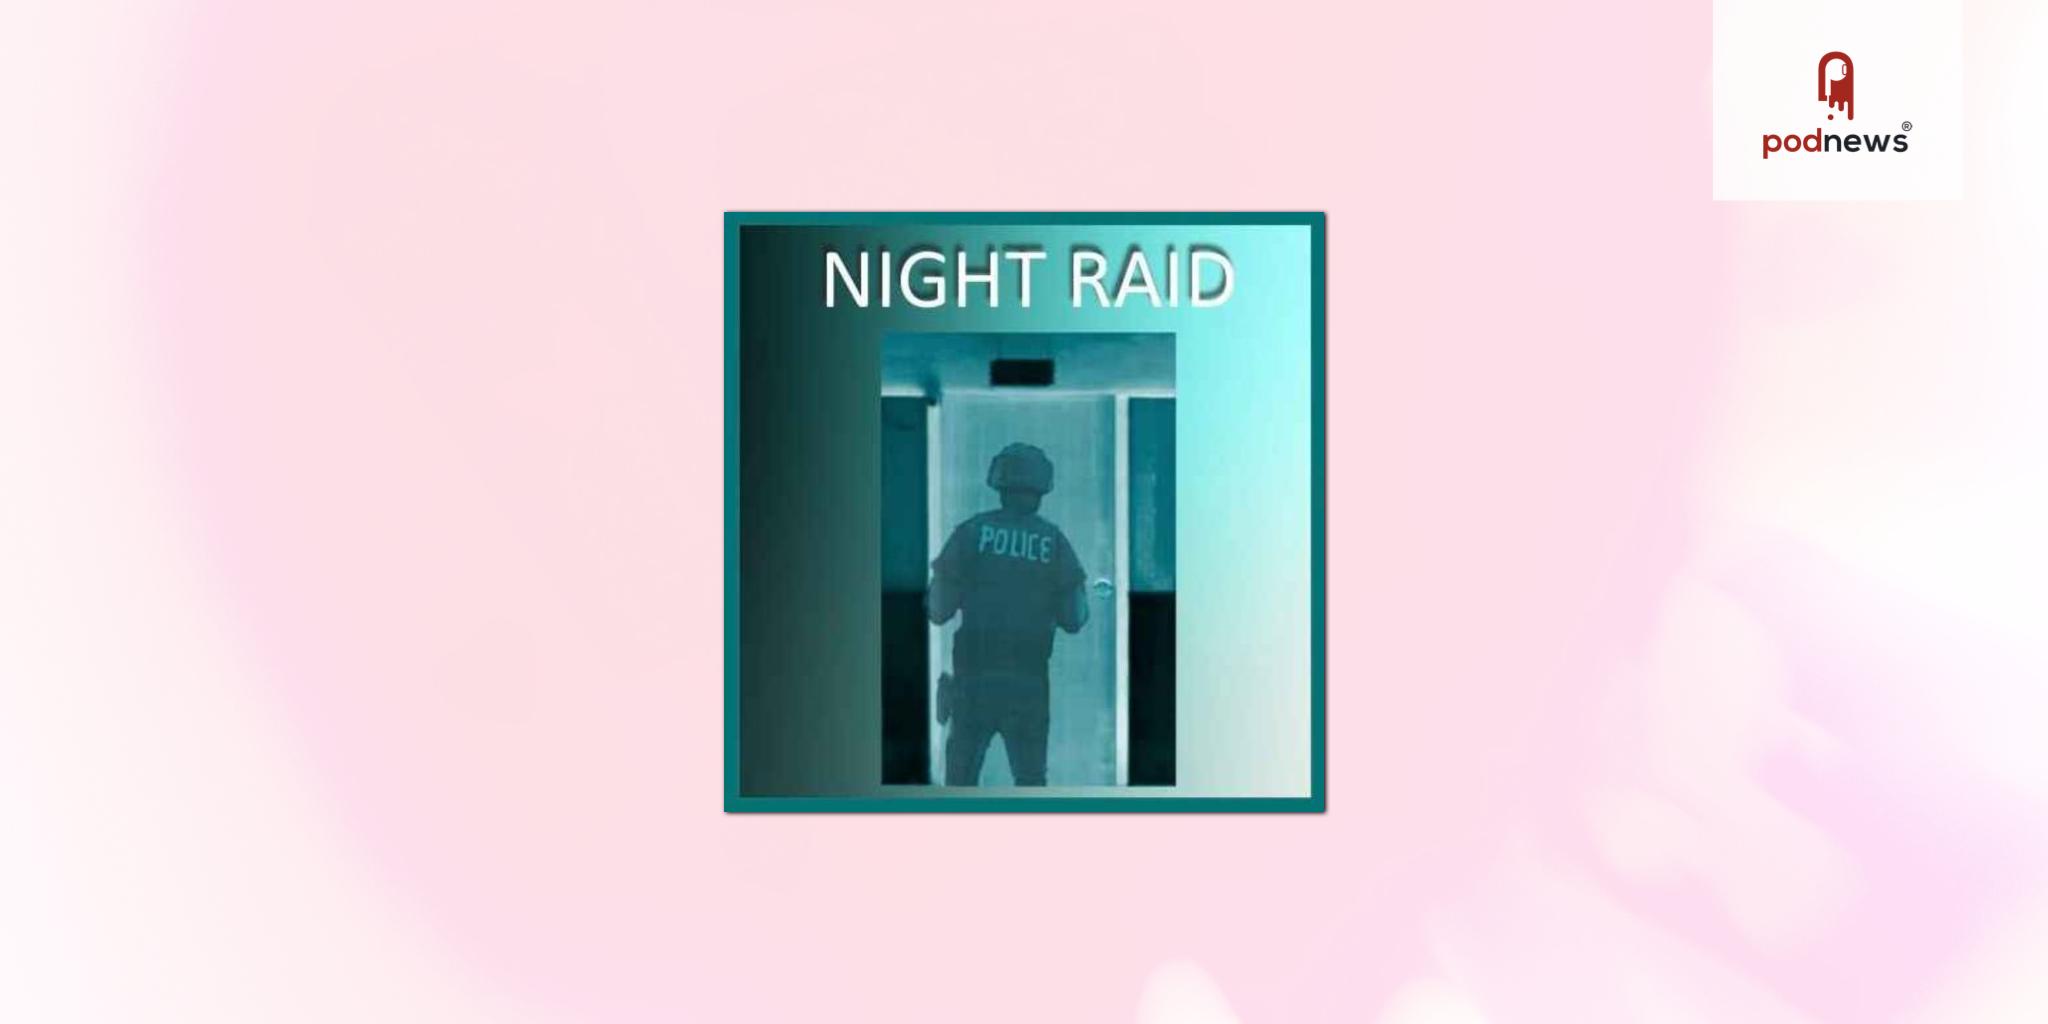 eOne, LAist 89.3, Crime Story, Acast announce partnership for new radio/podcast series, Night Raid